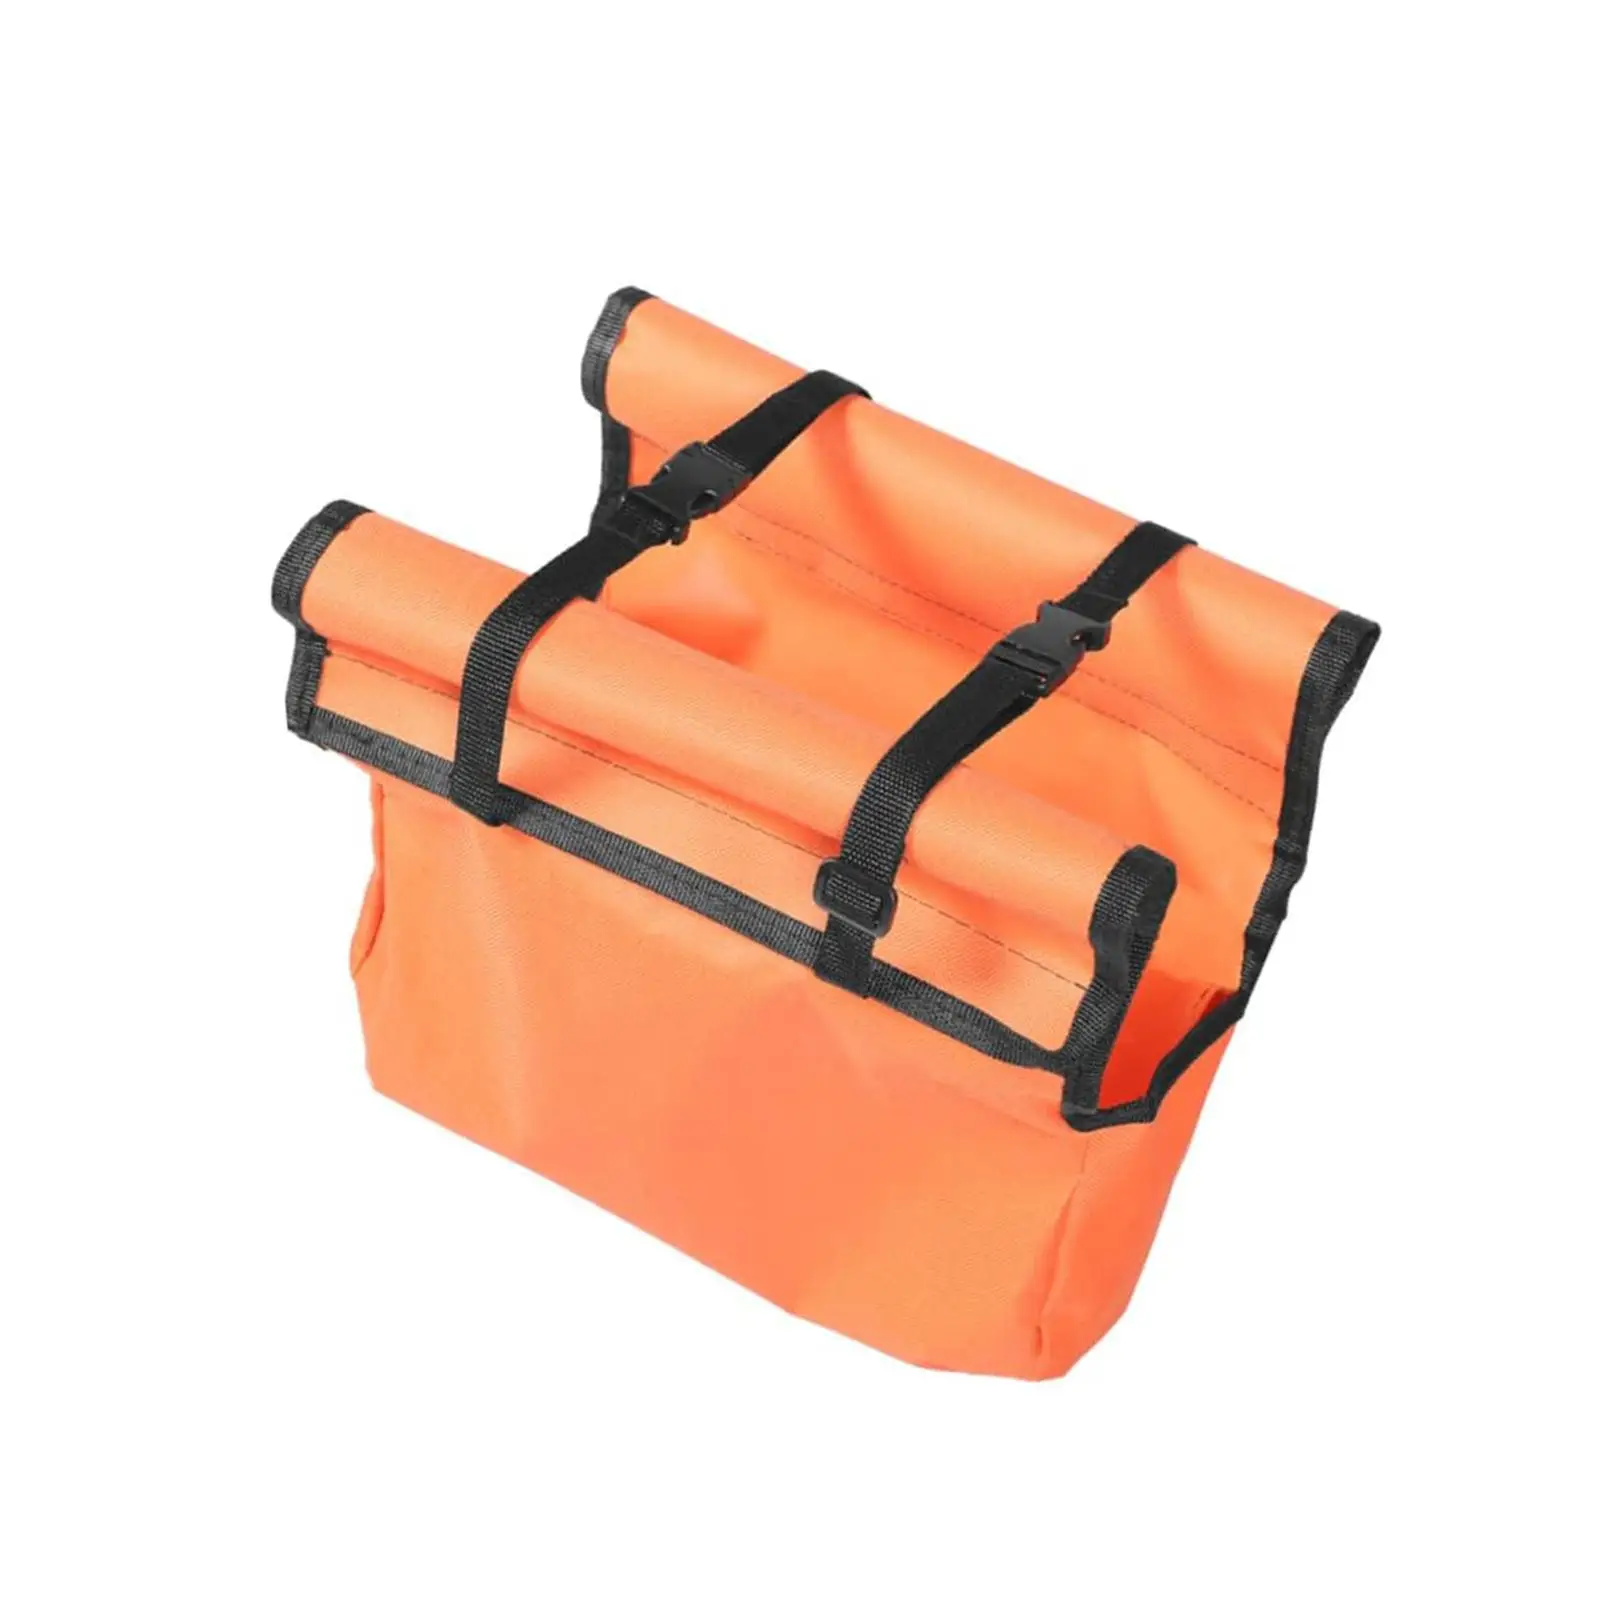 Folding Ladder Tool Storage Bag Versatile Durable 12 Inches Long Convenient Orange Accessories Oxford Cloth for Workshop